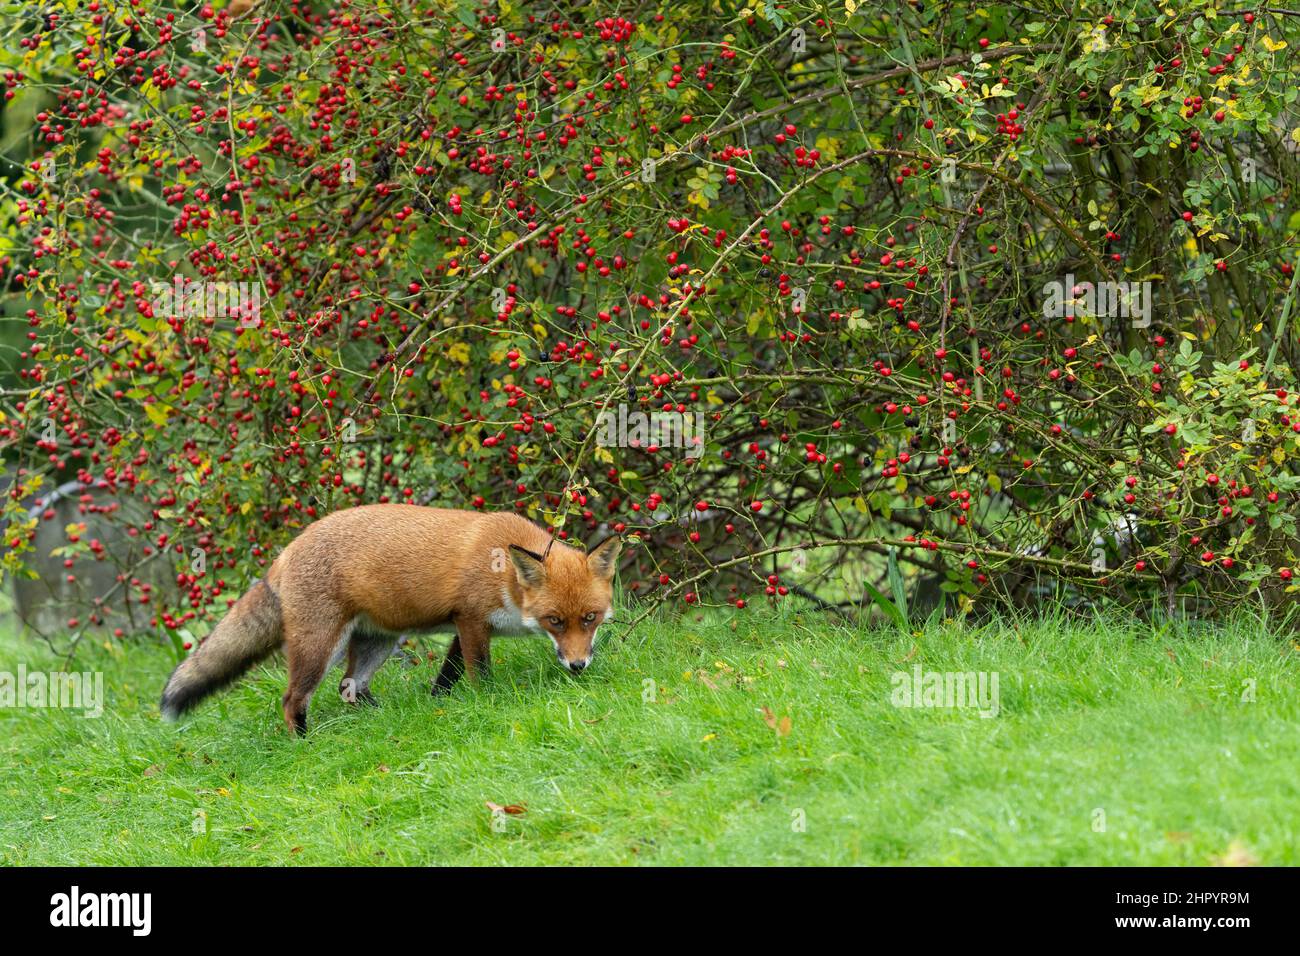 Red fox (Vulpes vulpes) standing near rosehips, England Stock Photo